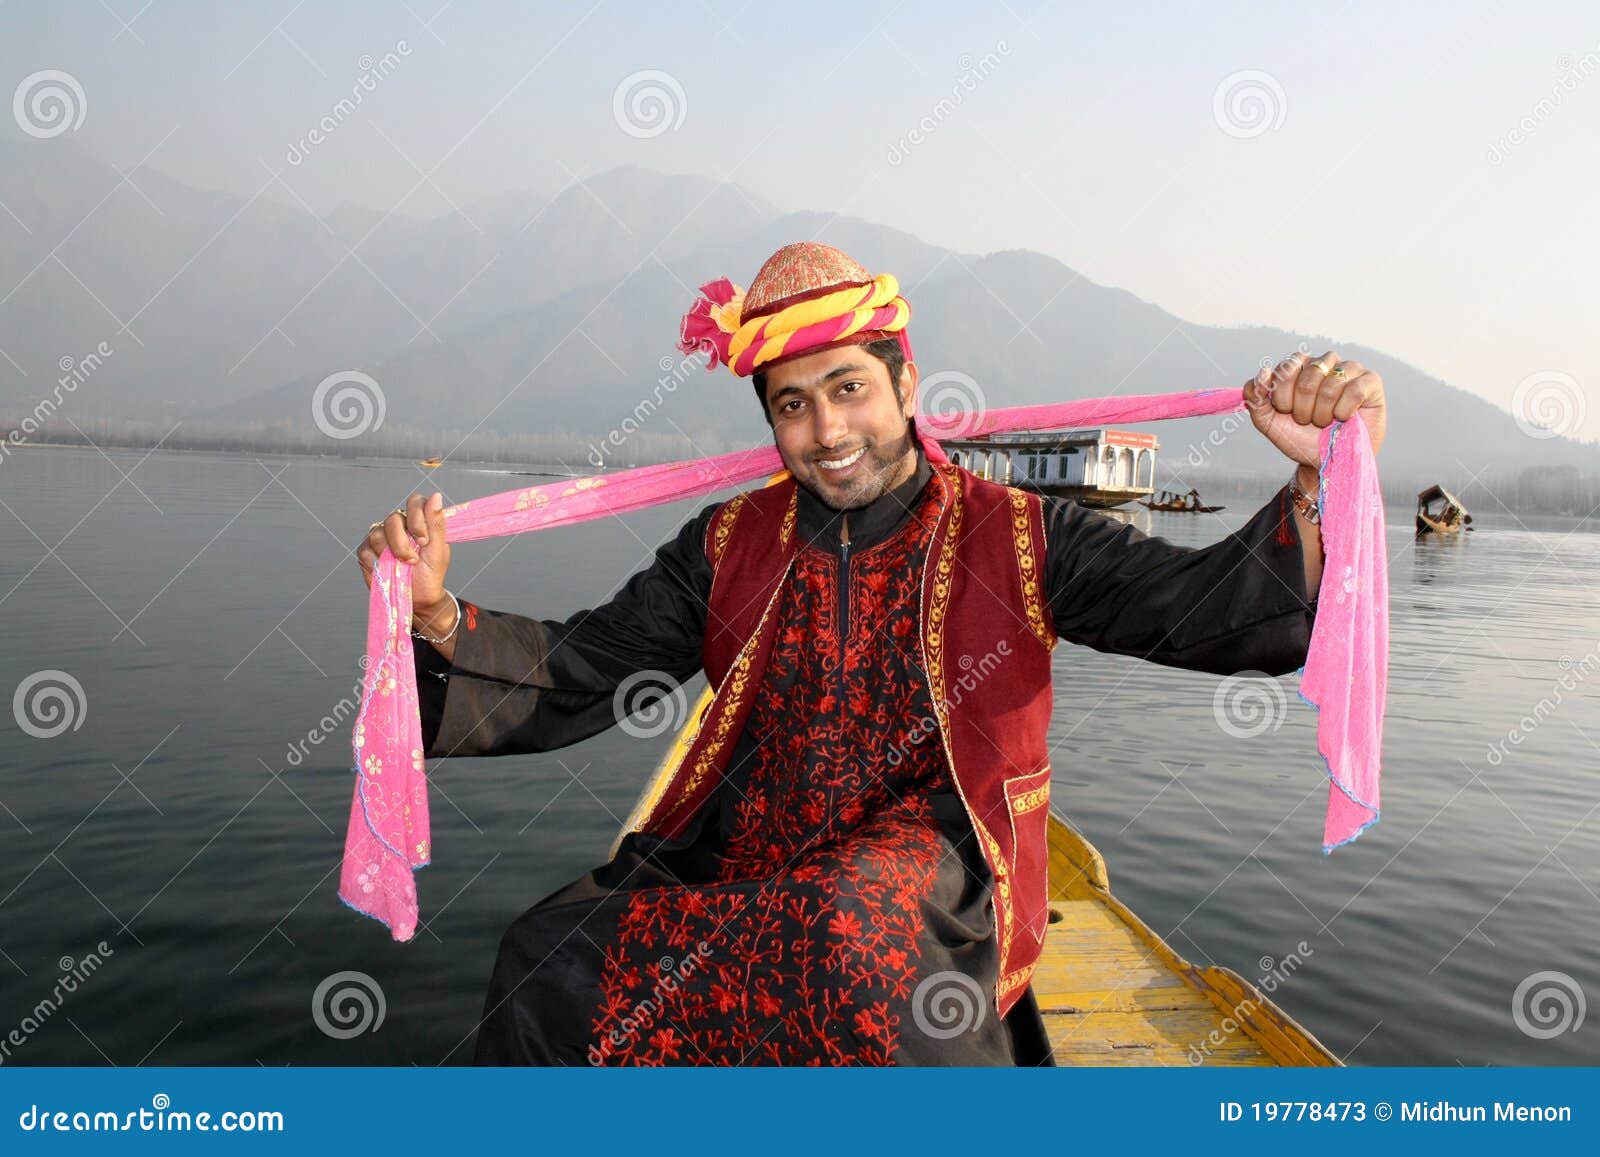 Indian Man Dancing To Folk Song With Pink Shawl Stock Image Imag